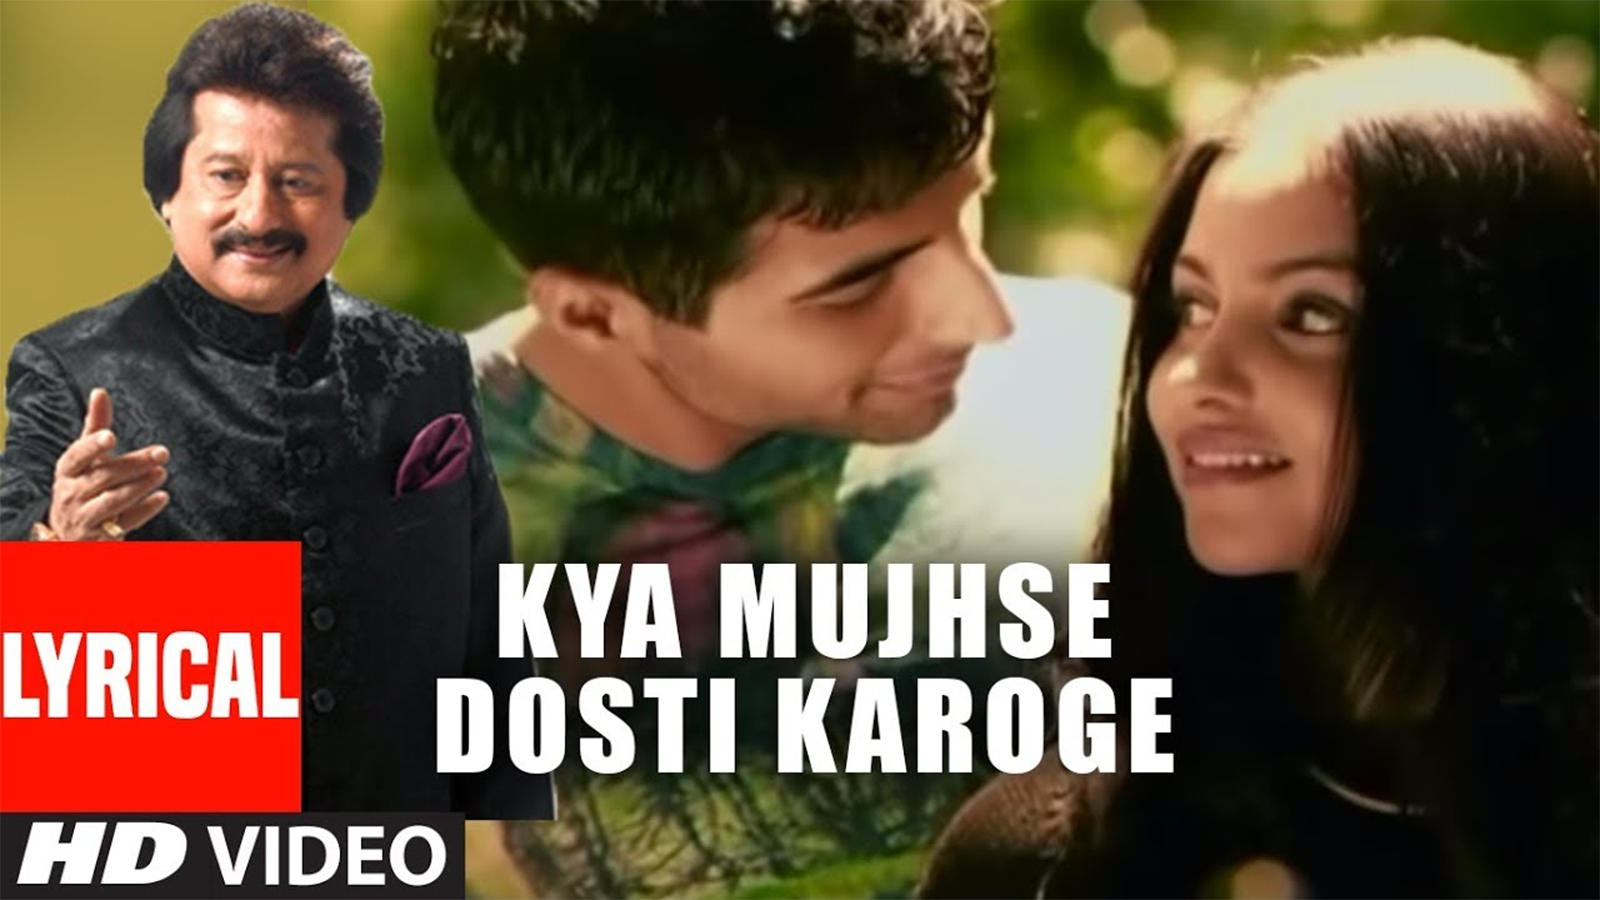 Mujhse Dosti Karoge Full Movie Watch online, free Youtube